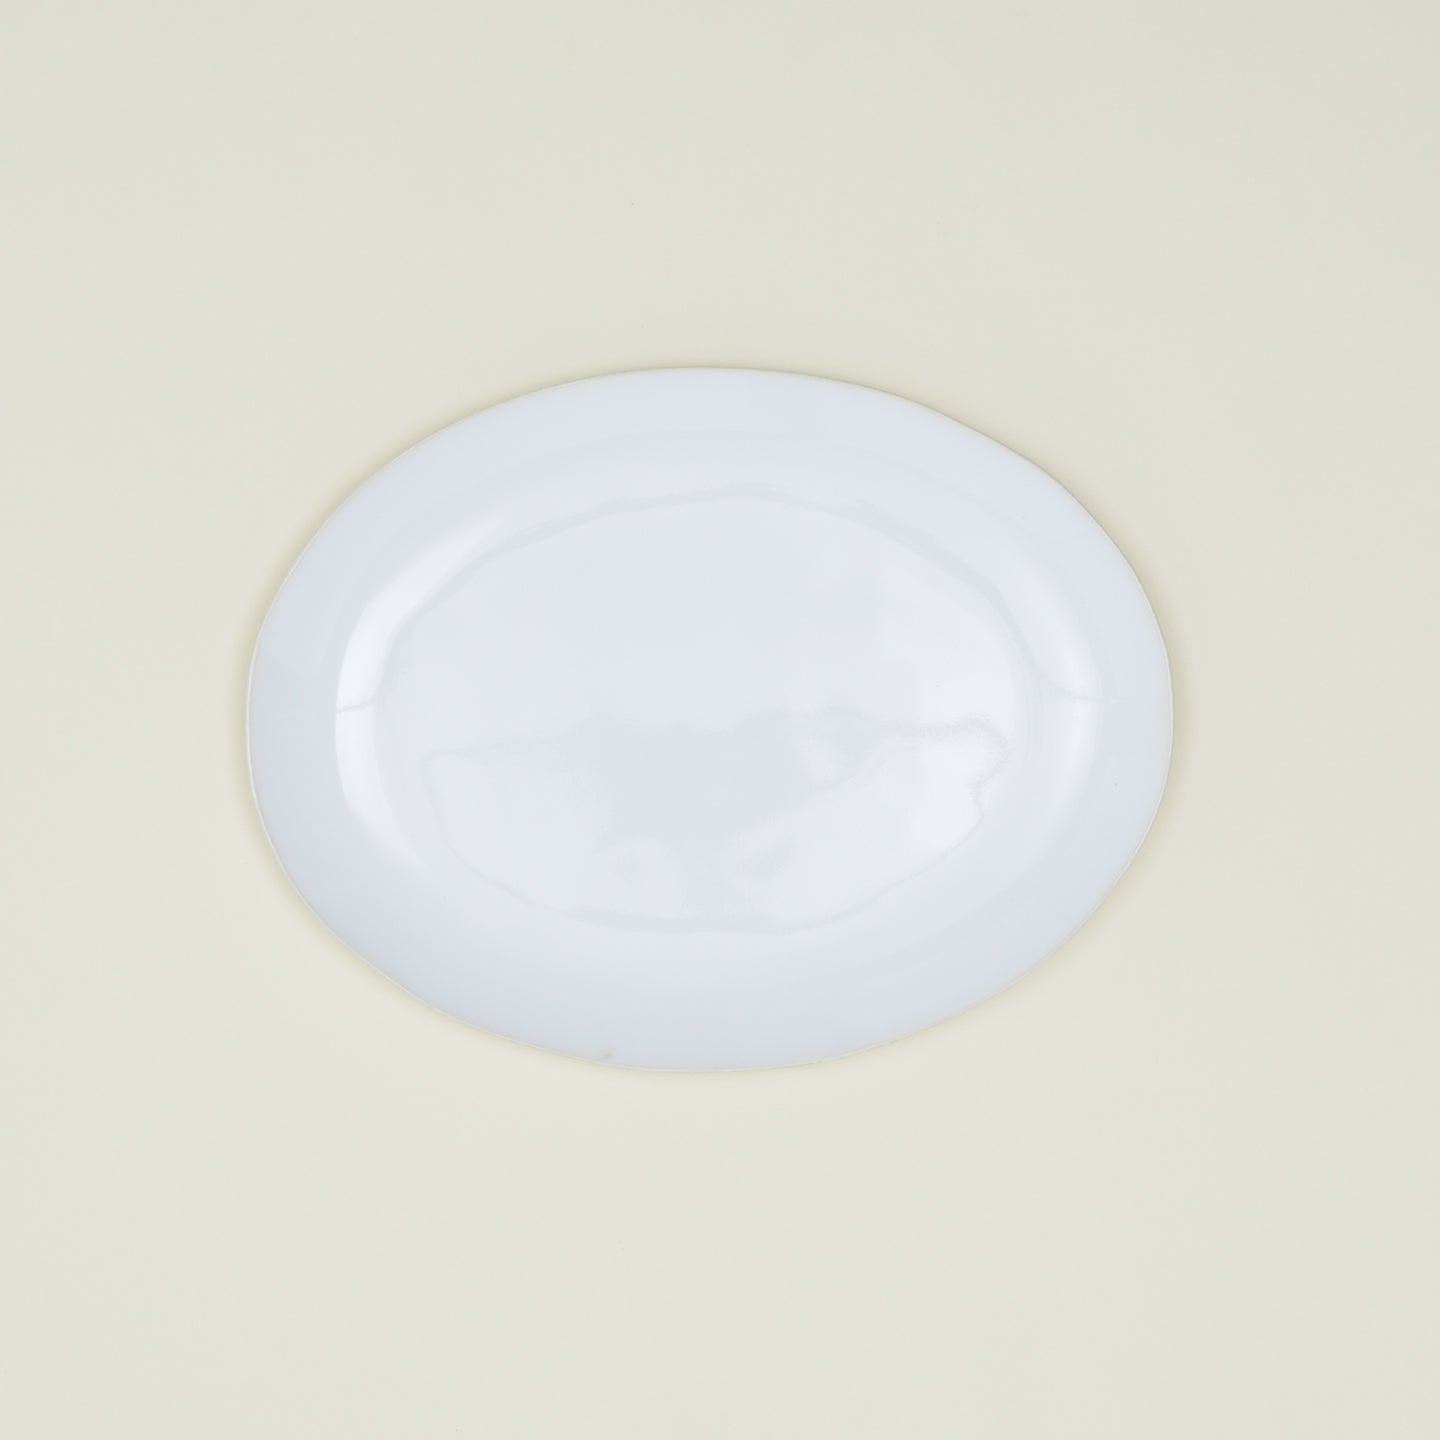 White Strata Serving Platter in Medium size.